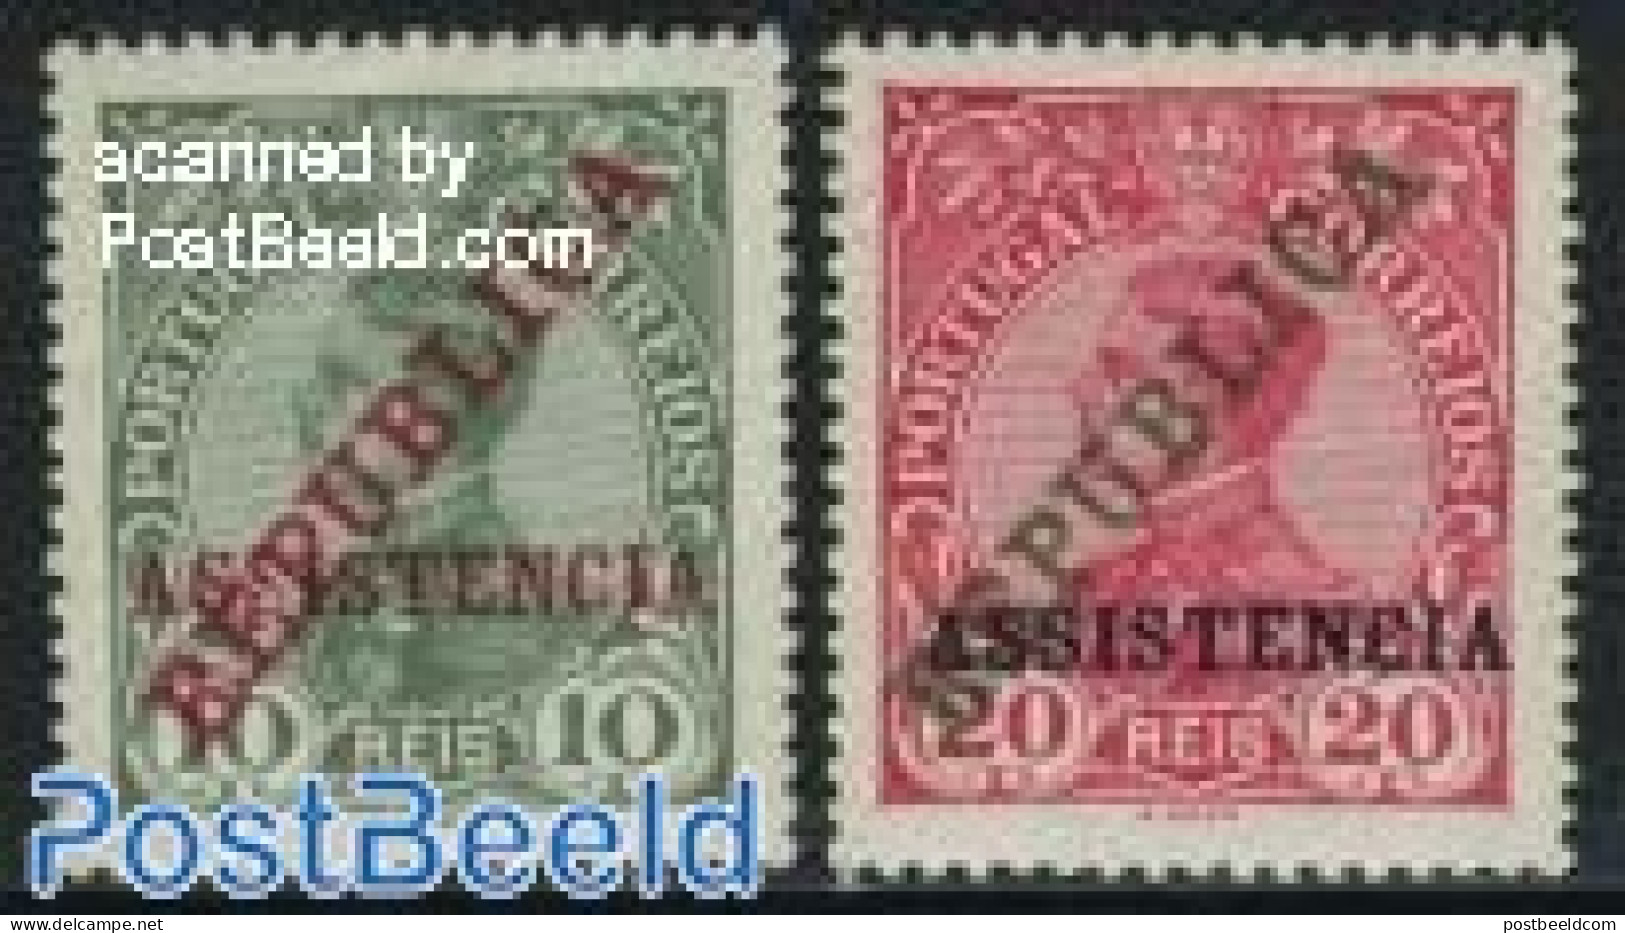 Portugal 1911 ASSISTENCIA 2v, Unused (hinged) - Nuevos